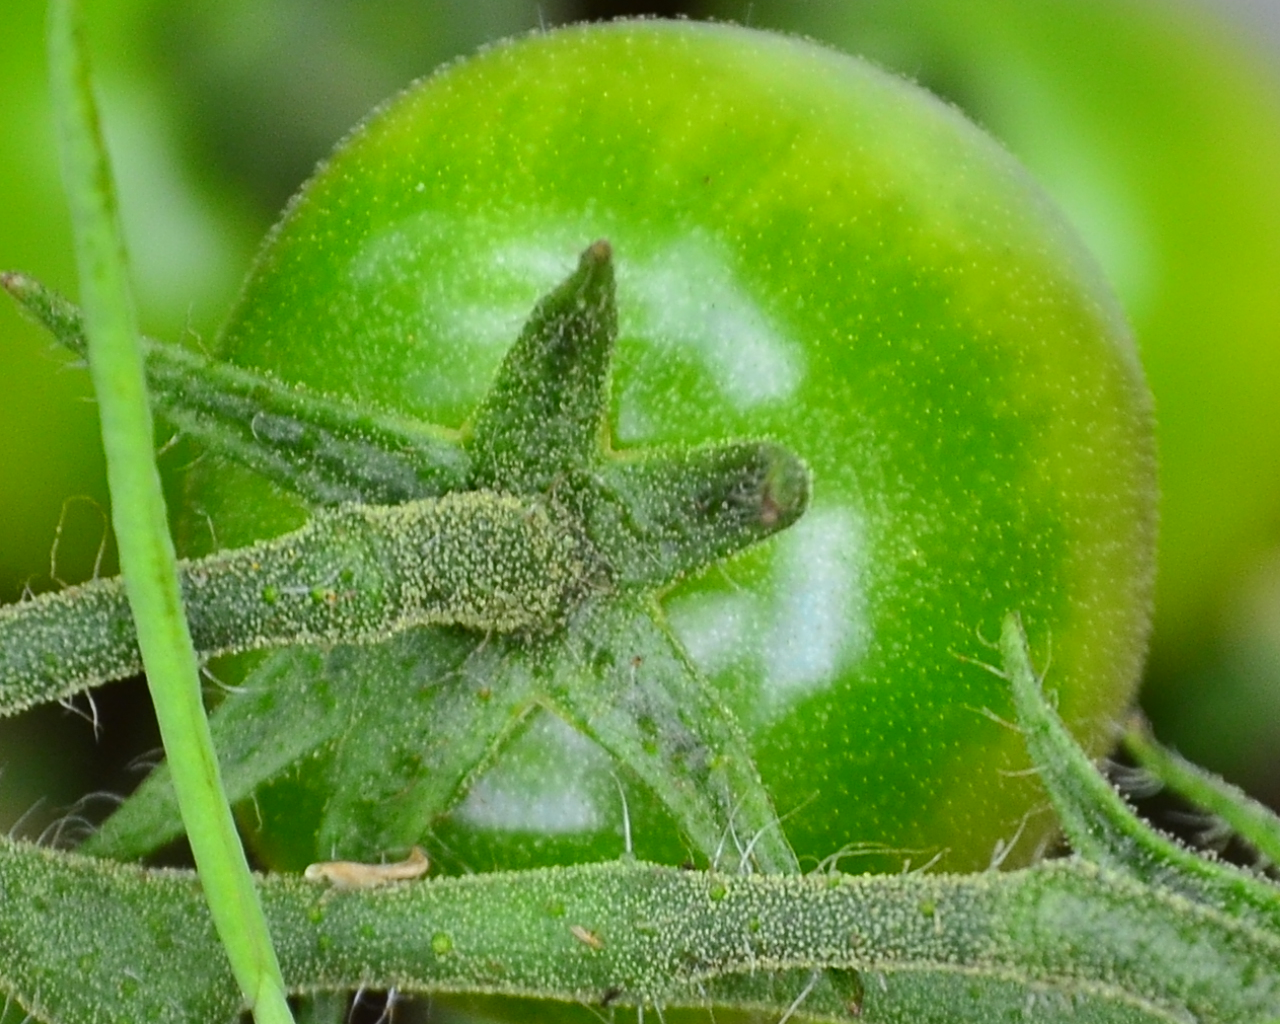 Extreme close up of tomatoa